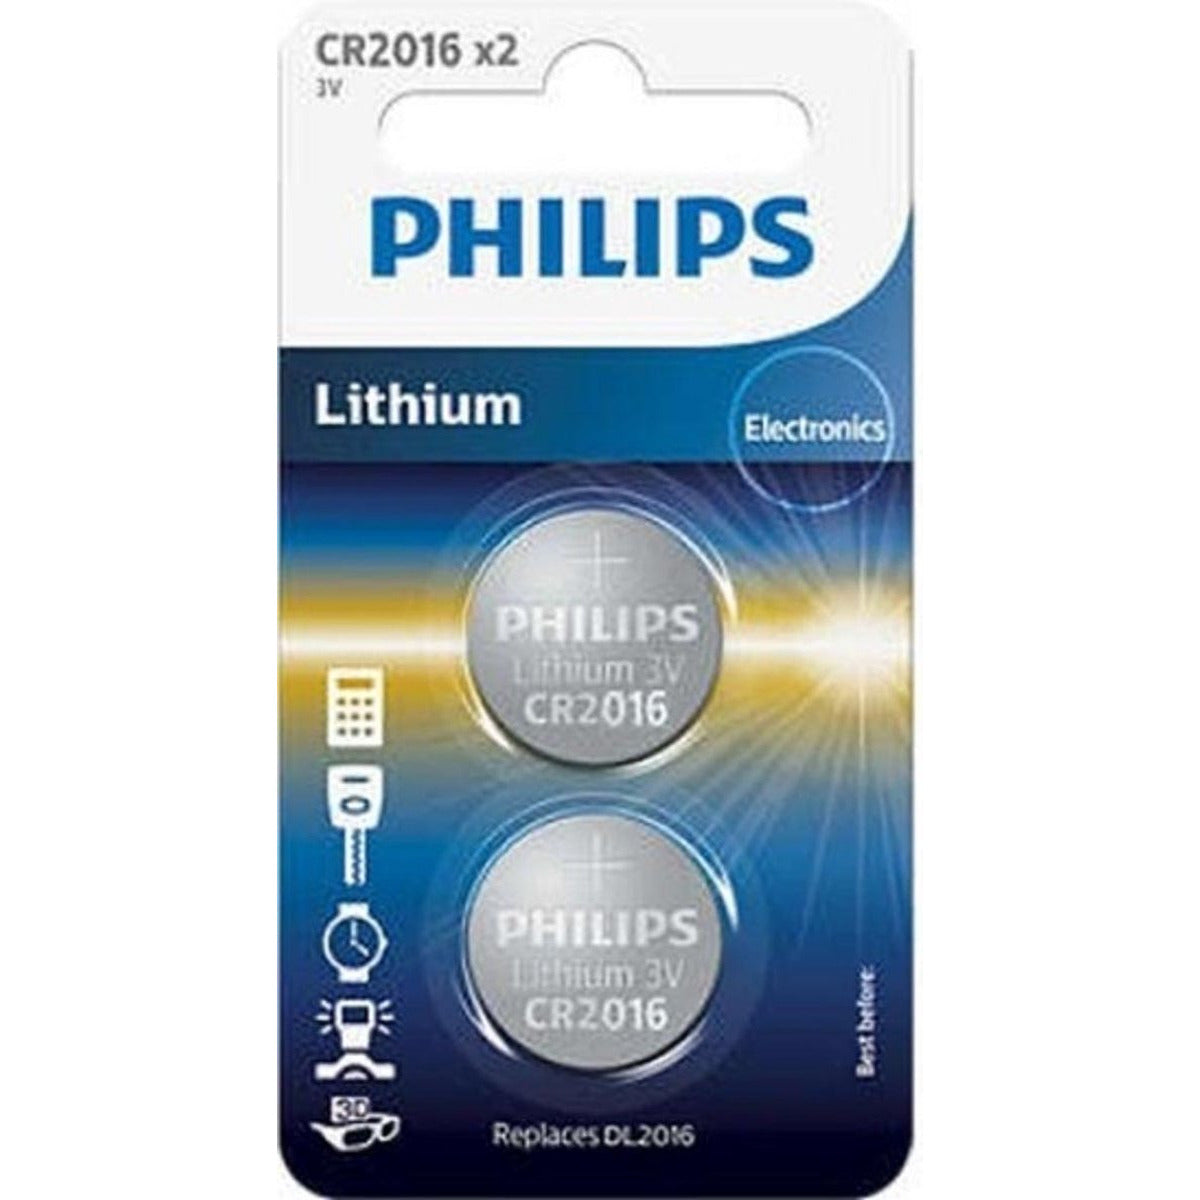 Phillips Lithium 3V Cell Batteries CR2016 - Pack of 2